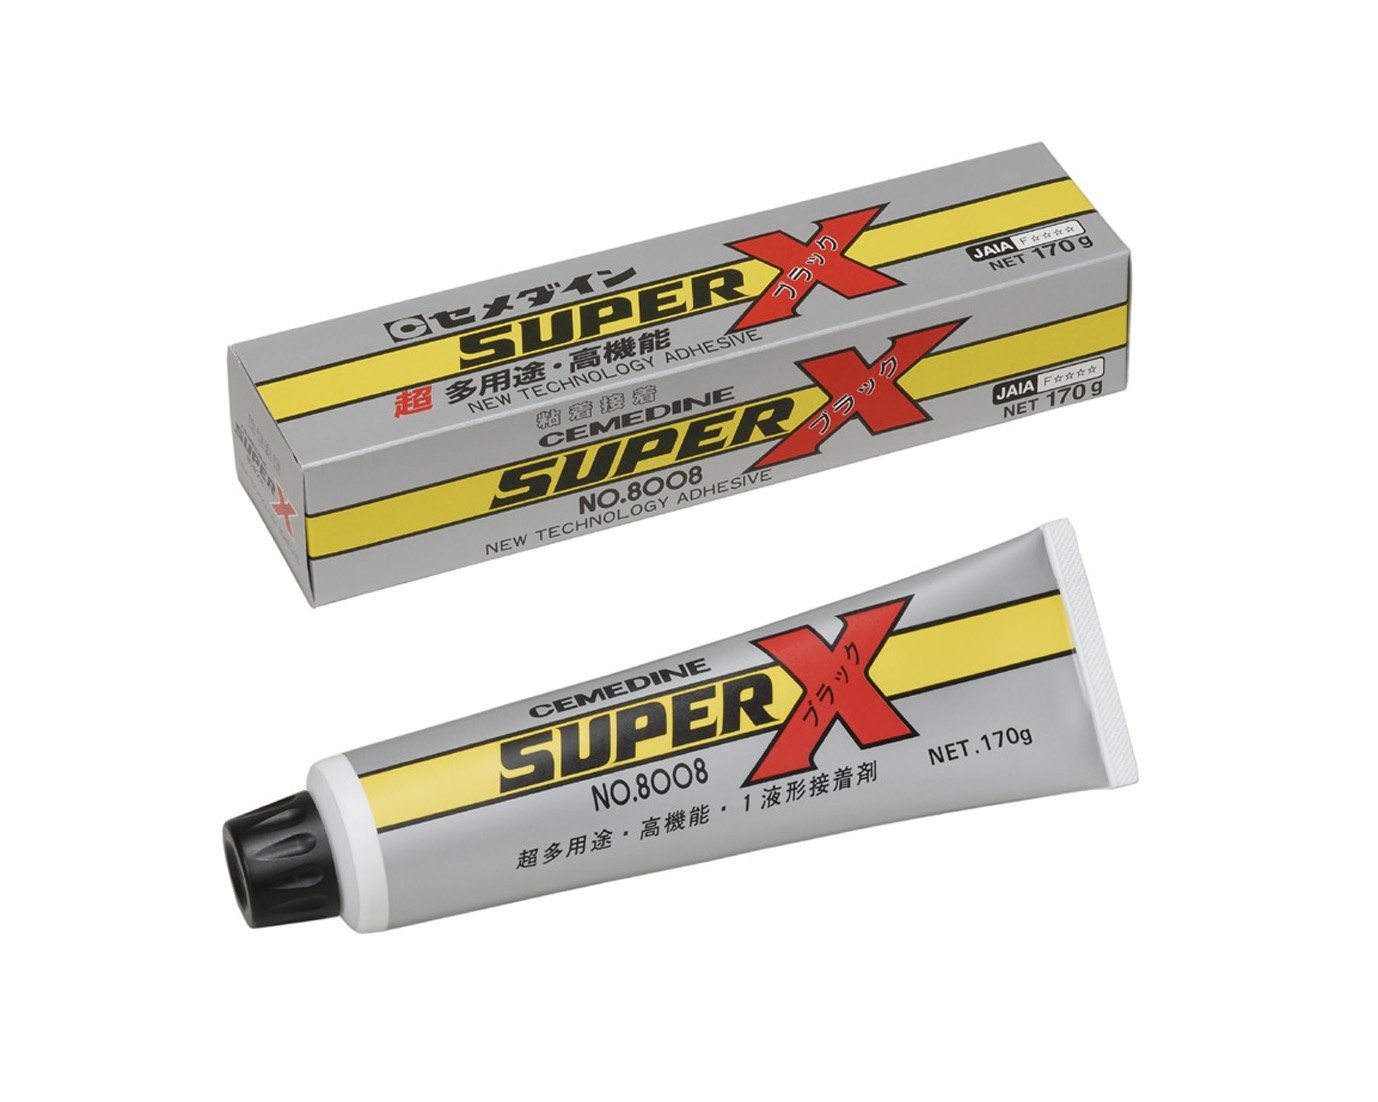 SUPERX NO.8008